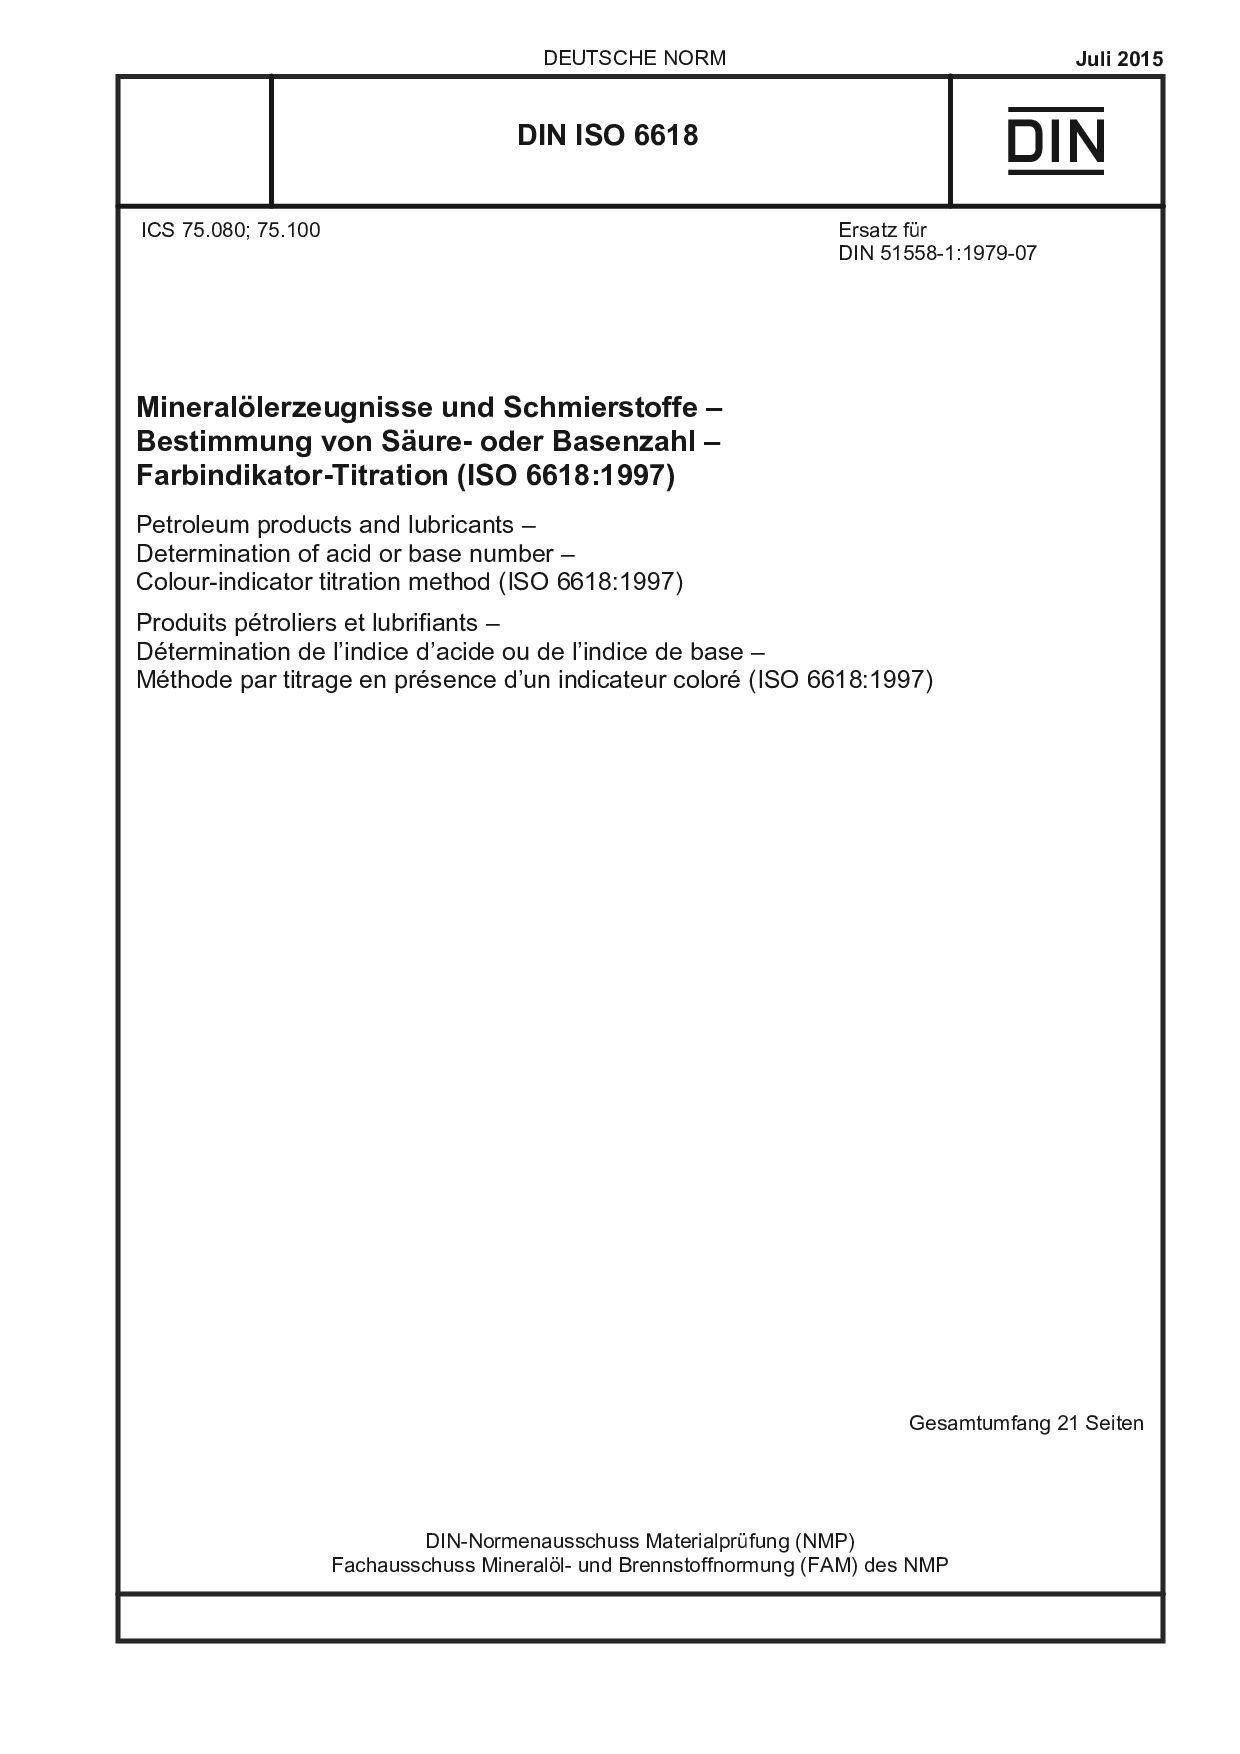 DIN ISO 6618:2015-07